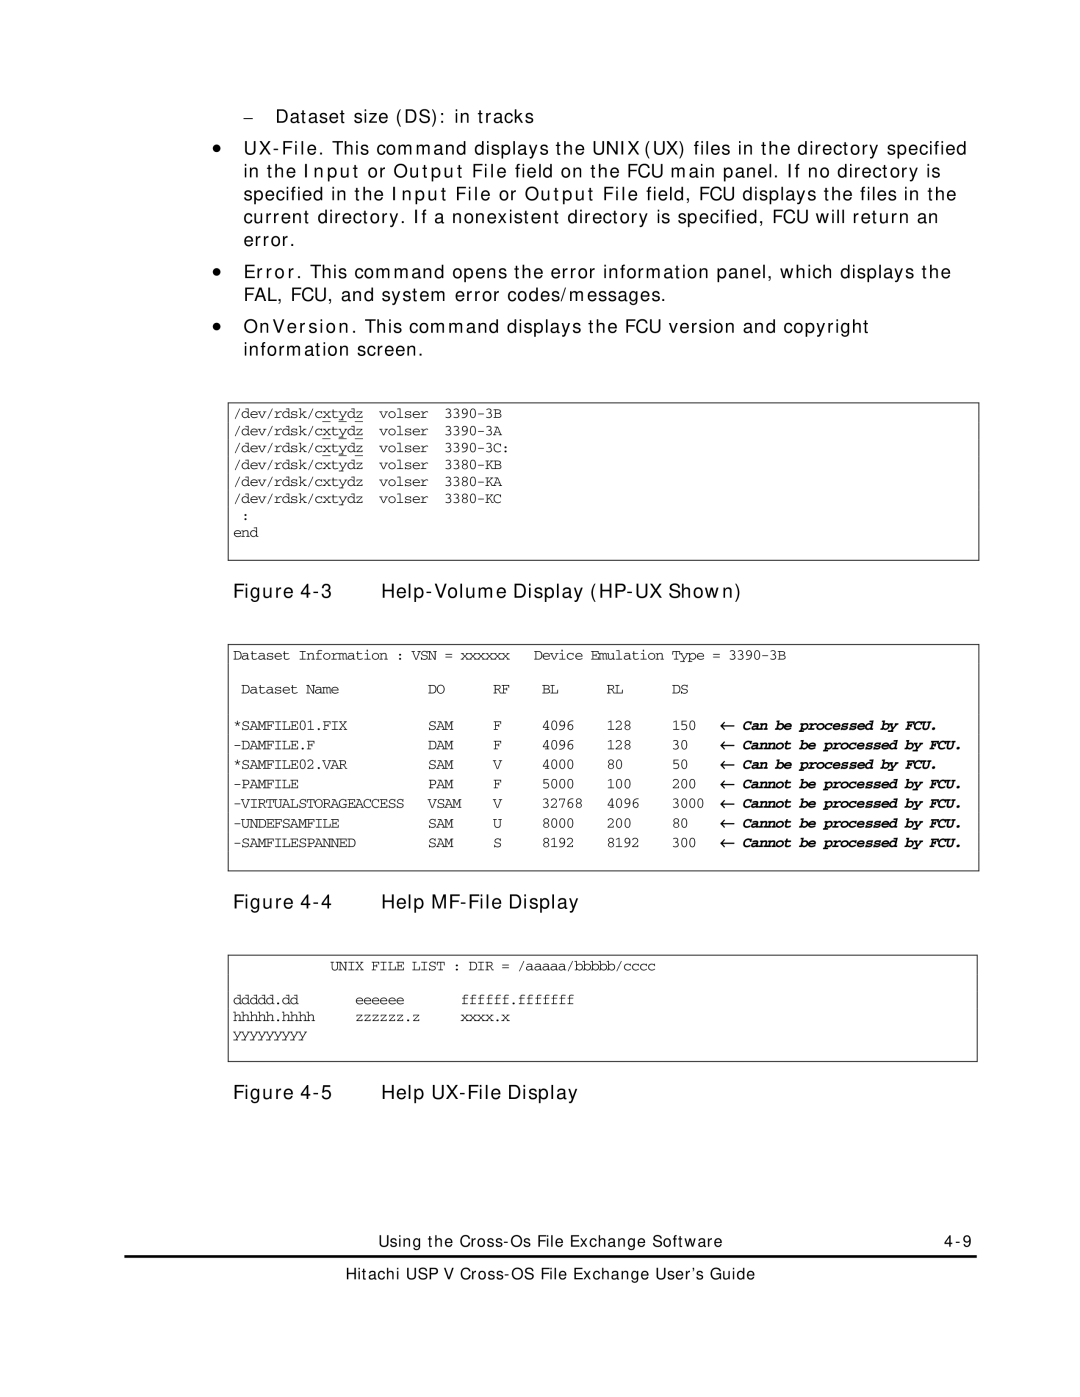 Hitachi MK-96RD647-01 manual Help-Volume Display HP-UX Shown 